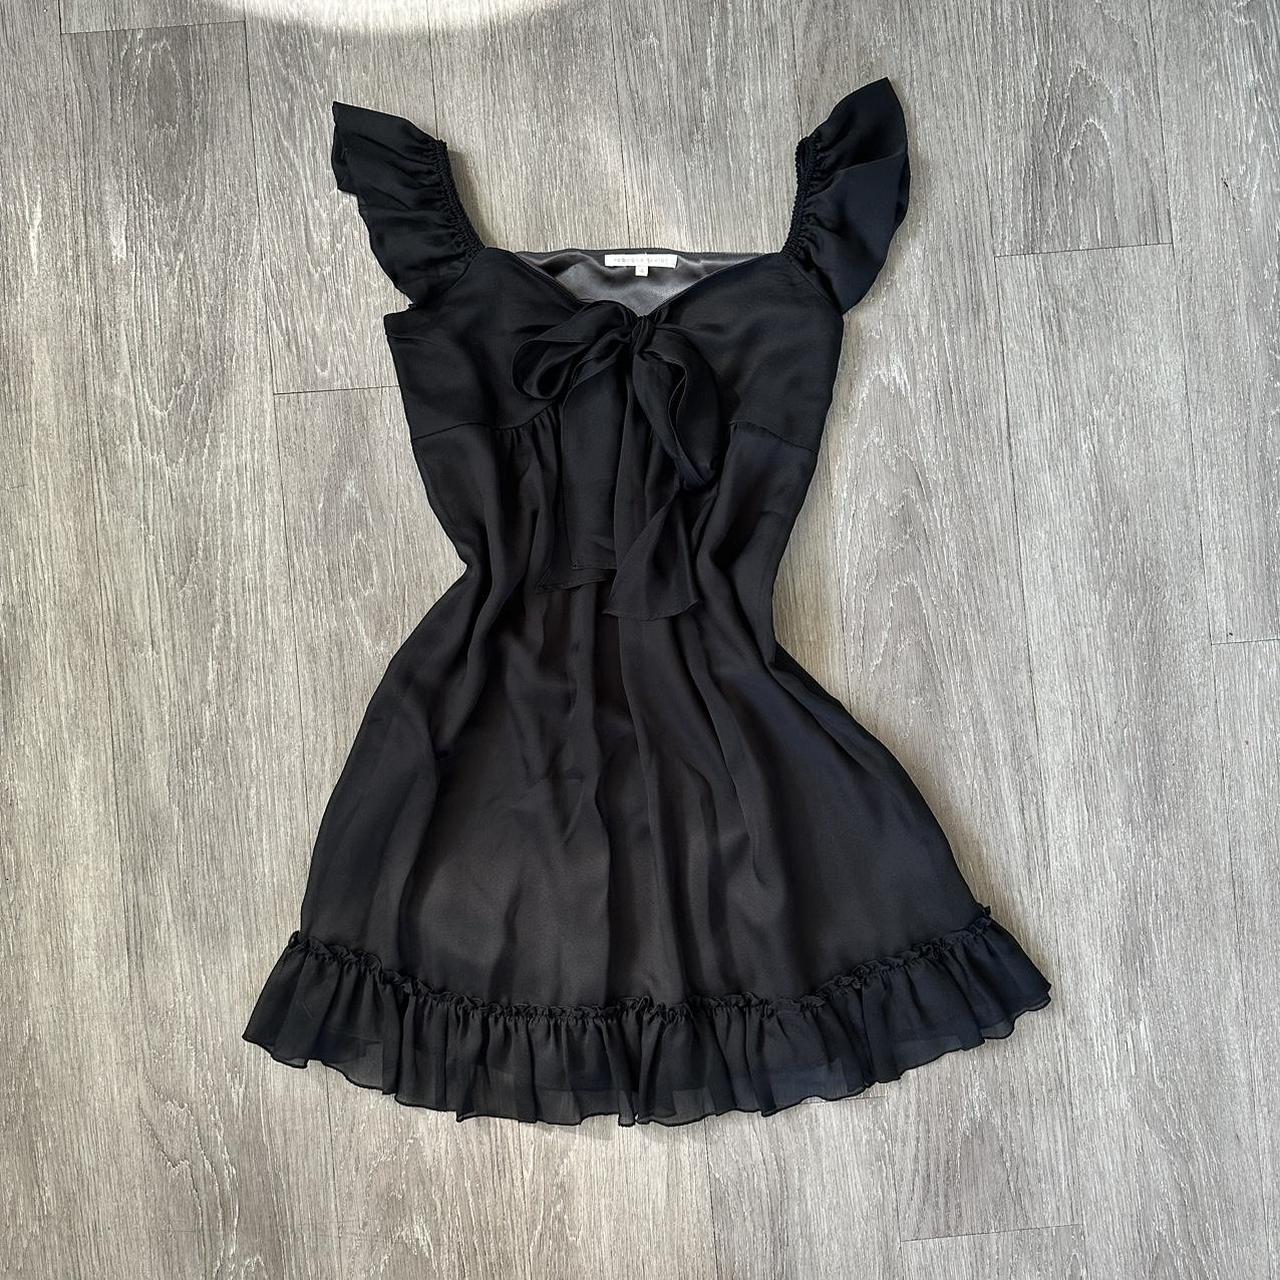 COQUETTE STYLE BLACK DRESS *Brand - REBECCA... - Depop